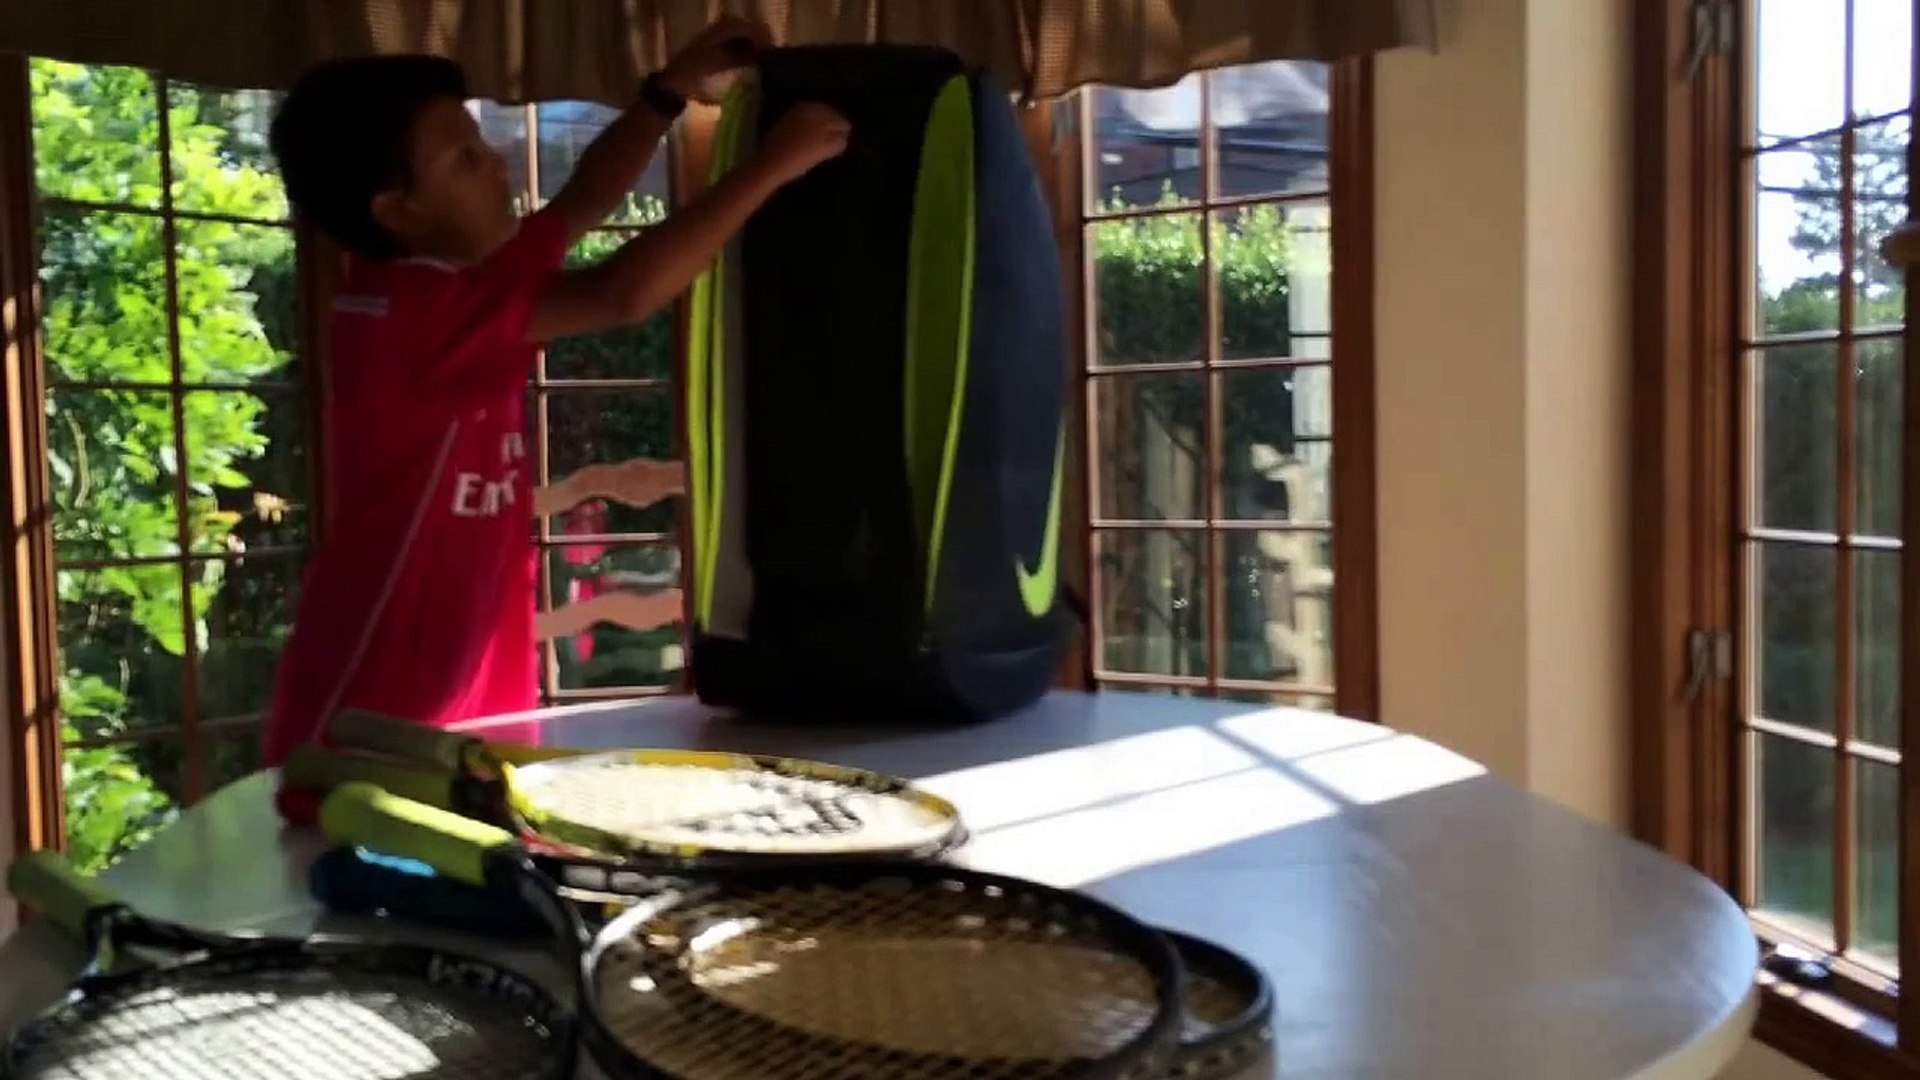 Nike court tech 1 tennis bag review - video Dailymotion